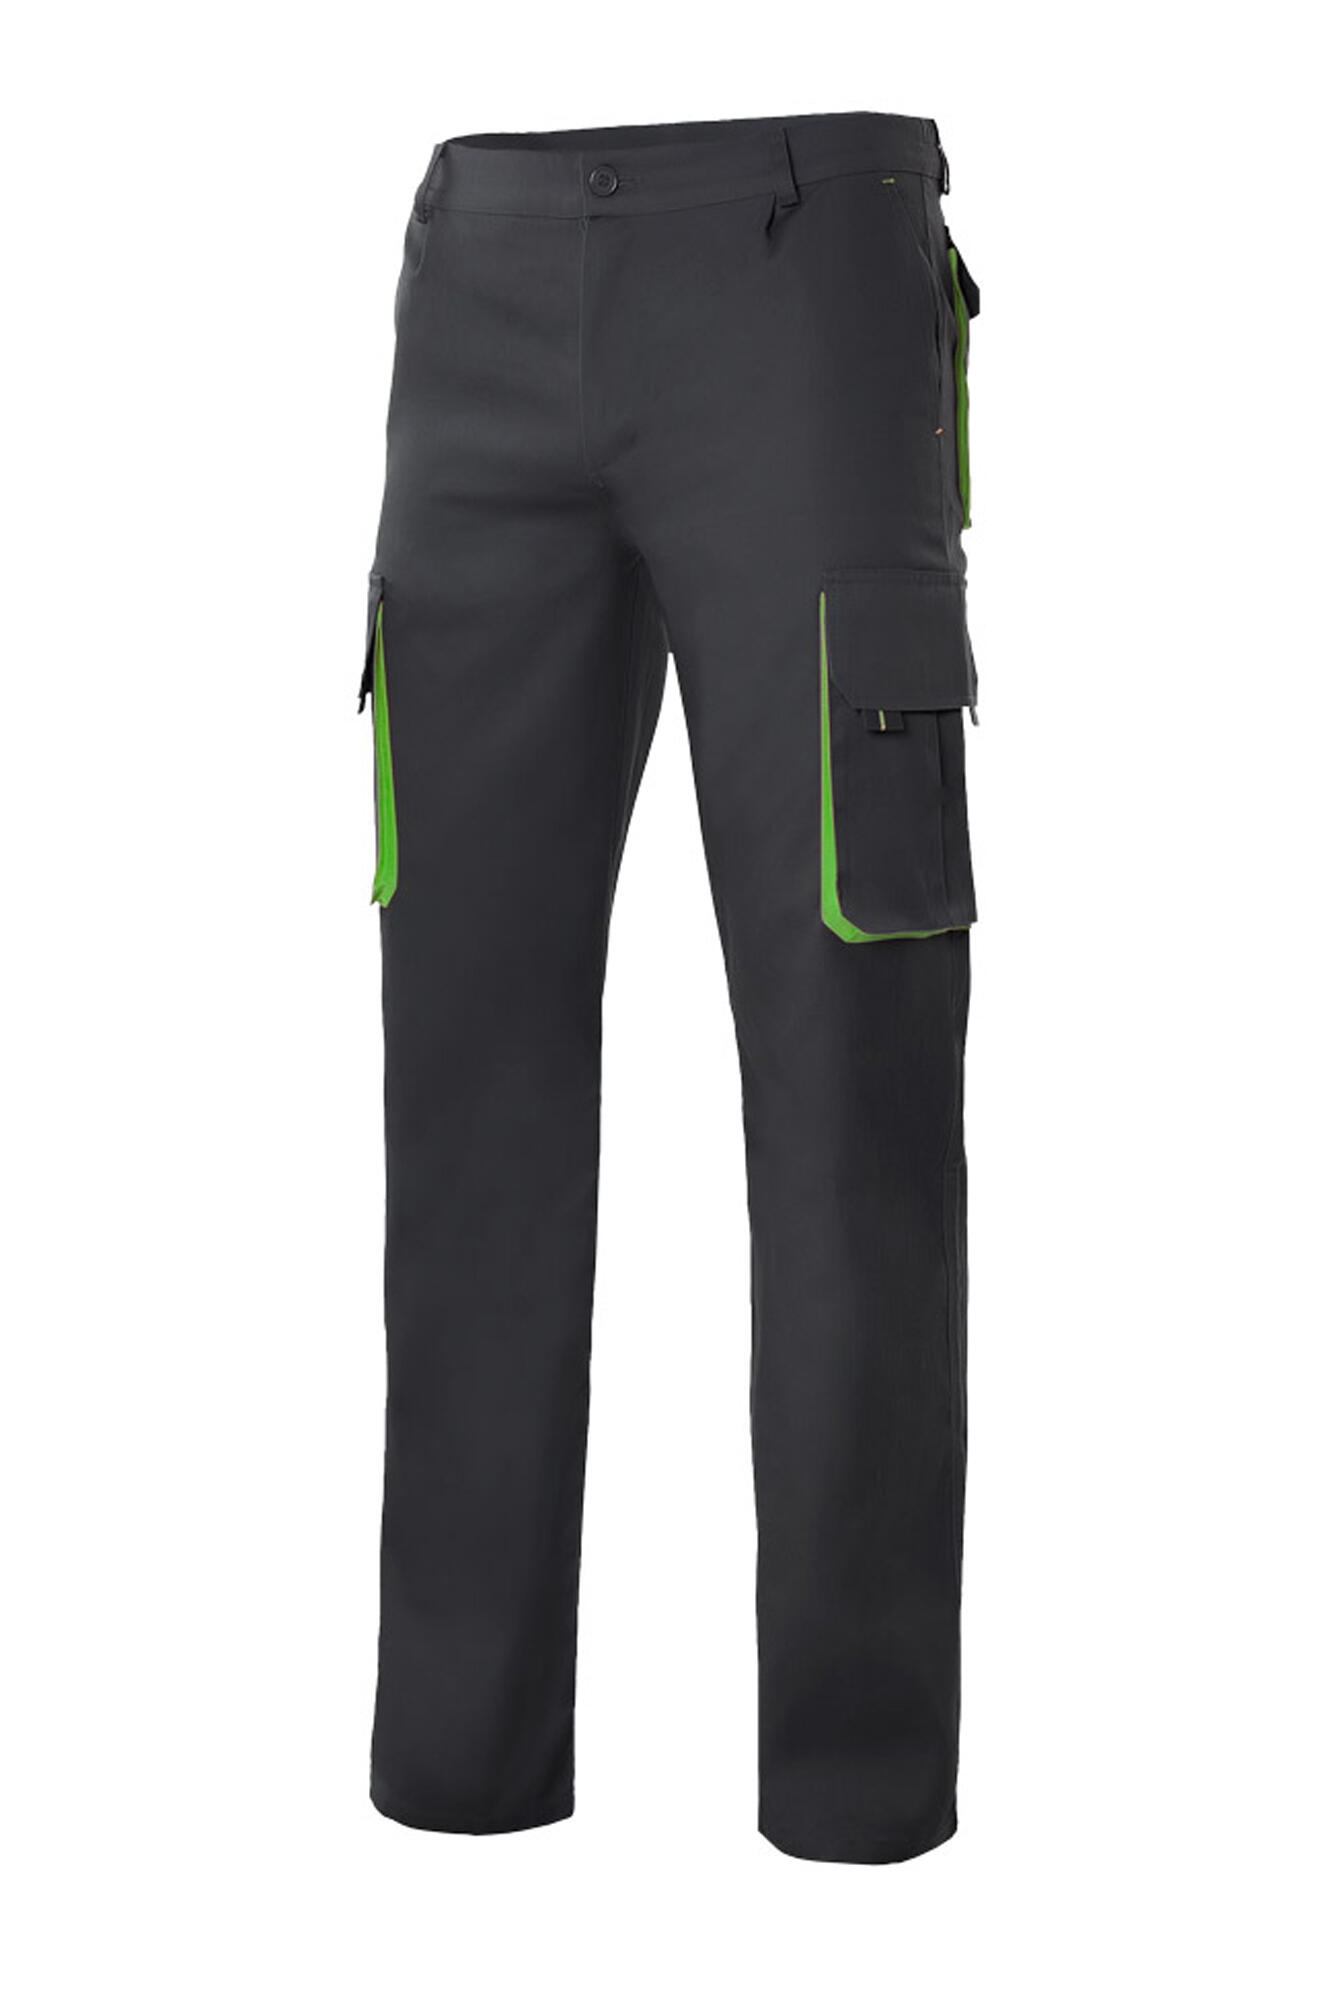 Pantalon de trabajo bicolor multibol negr/verdelima t46